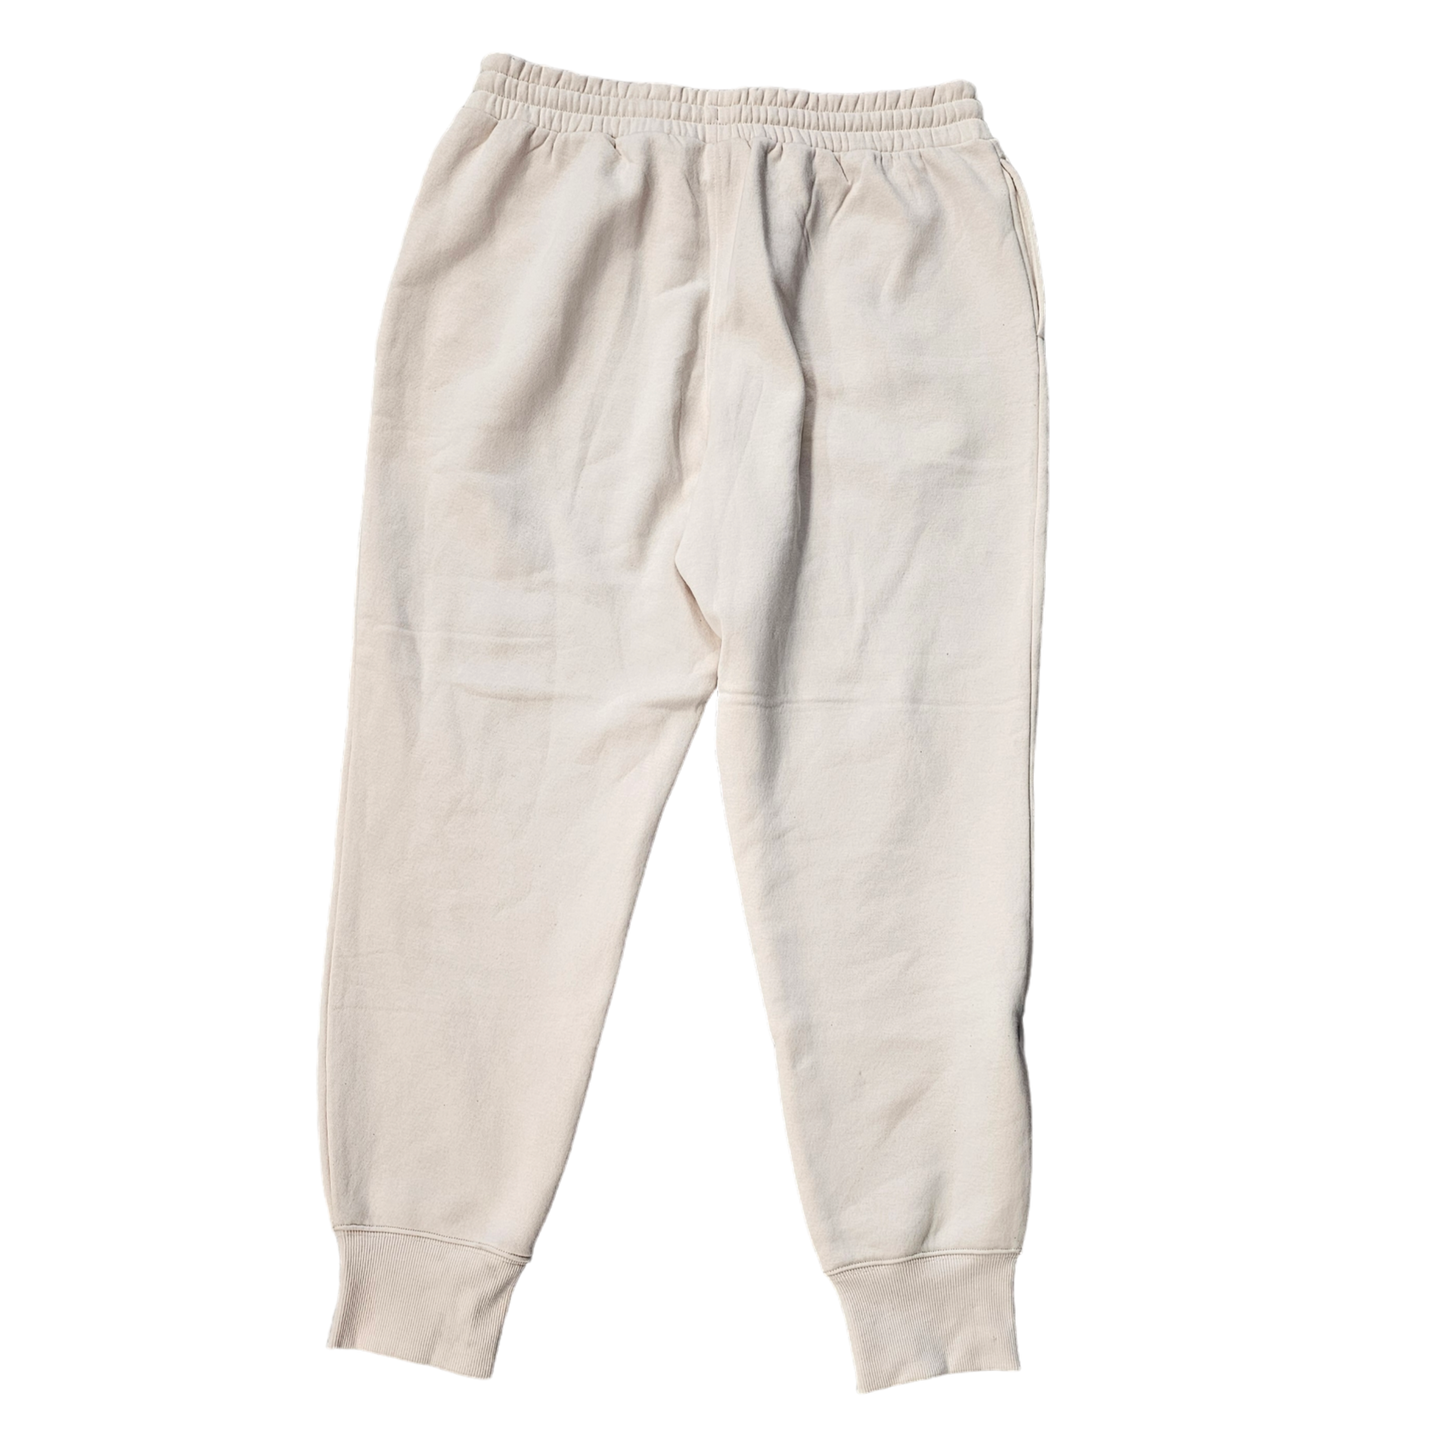 Athletic Pants By Fila  Size: L